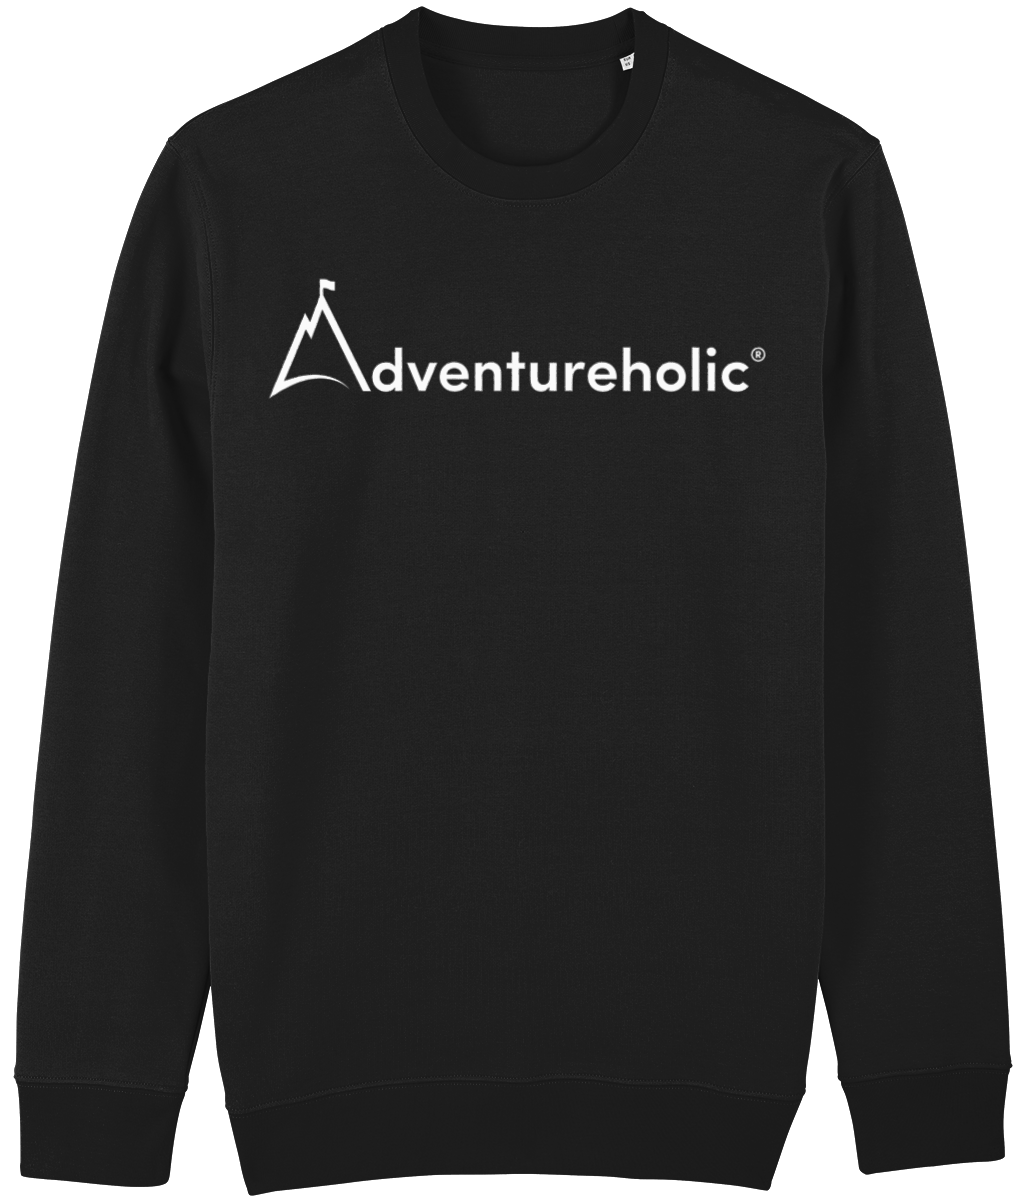 Adventureholic Unisex Sweatshirt - White Print